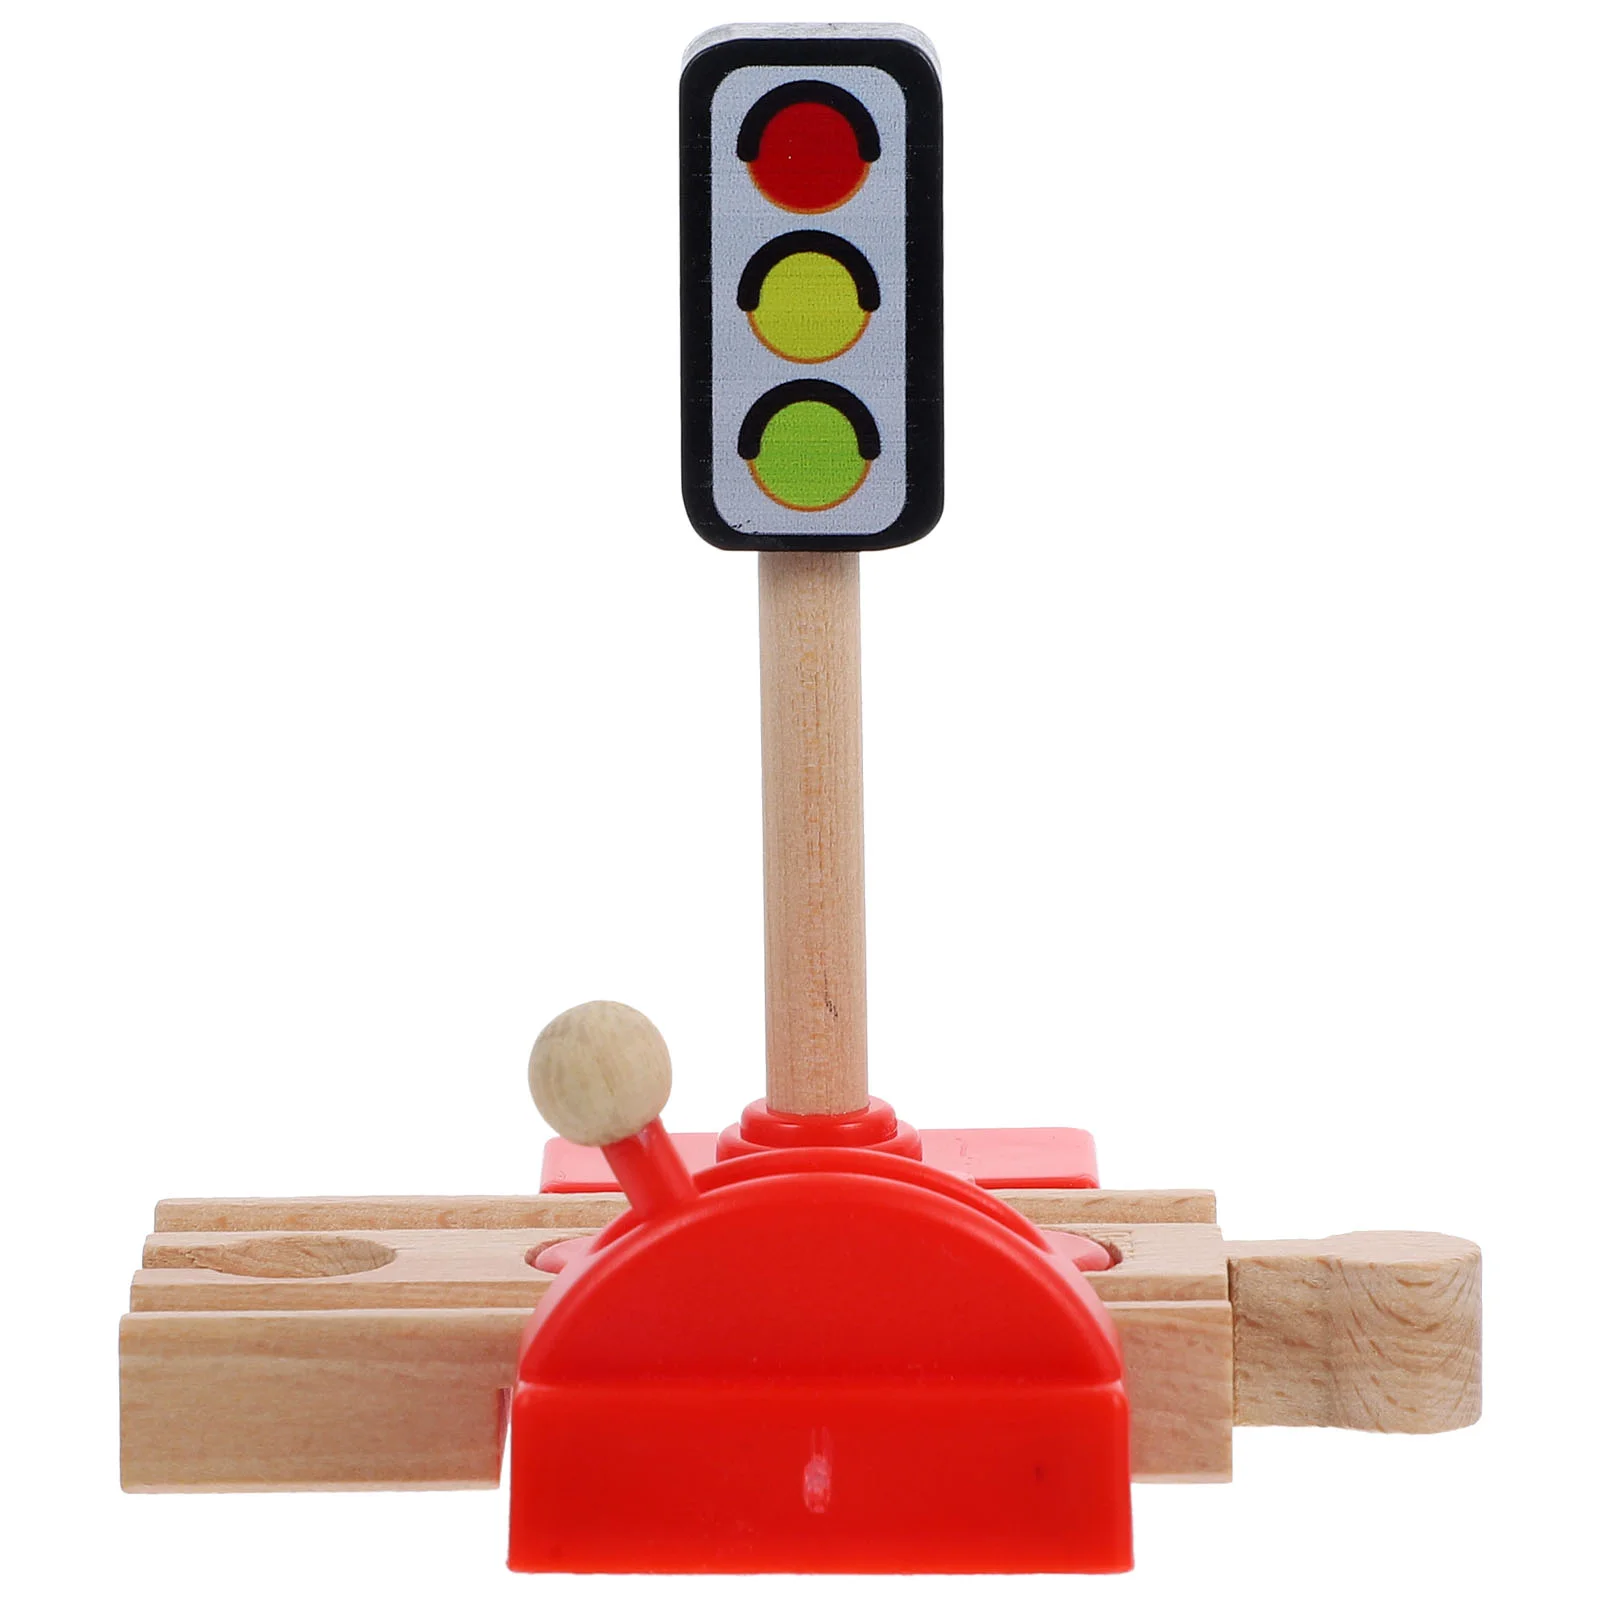 

Train Track Accessories Simulation Roadblock Toy Kids Educational Toys DIY Wood Pretend Model Child Wooden Trains